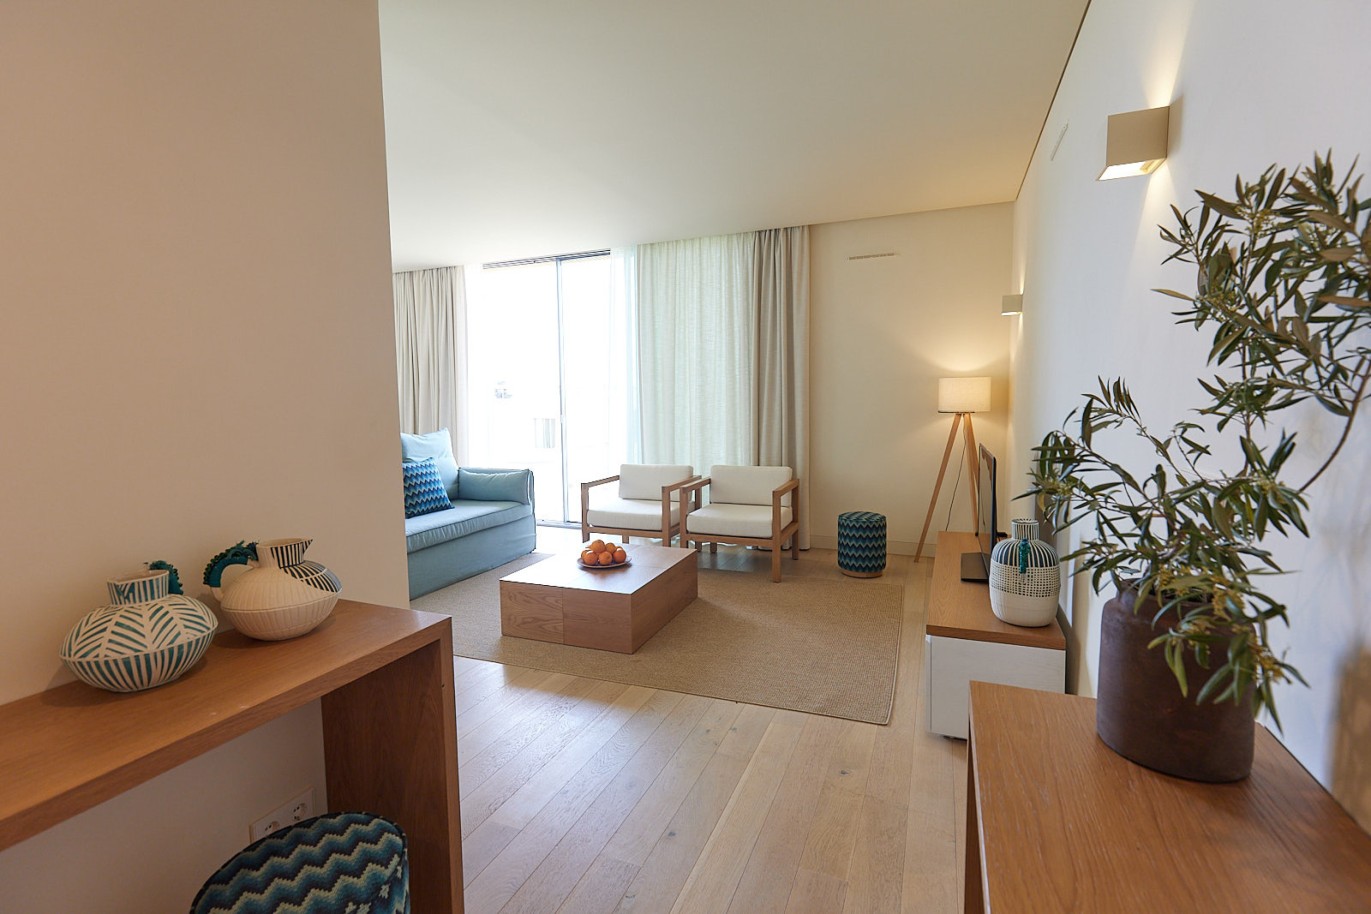 2 bedroom apartment in resort, for sale in Porches, Algarve_230589